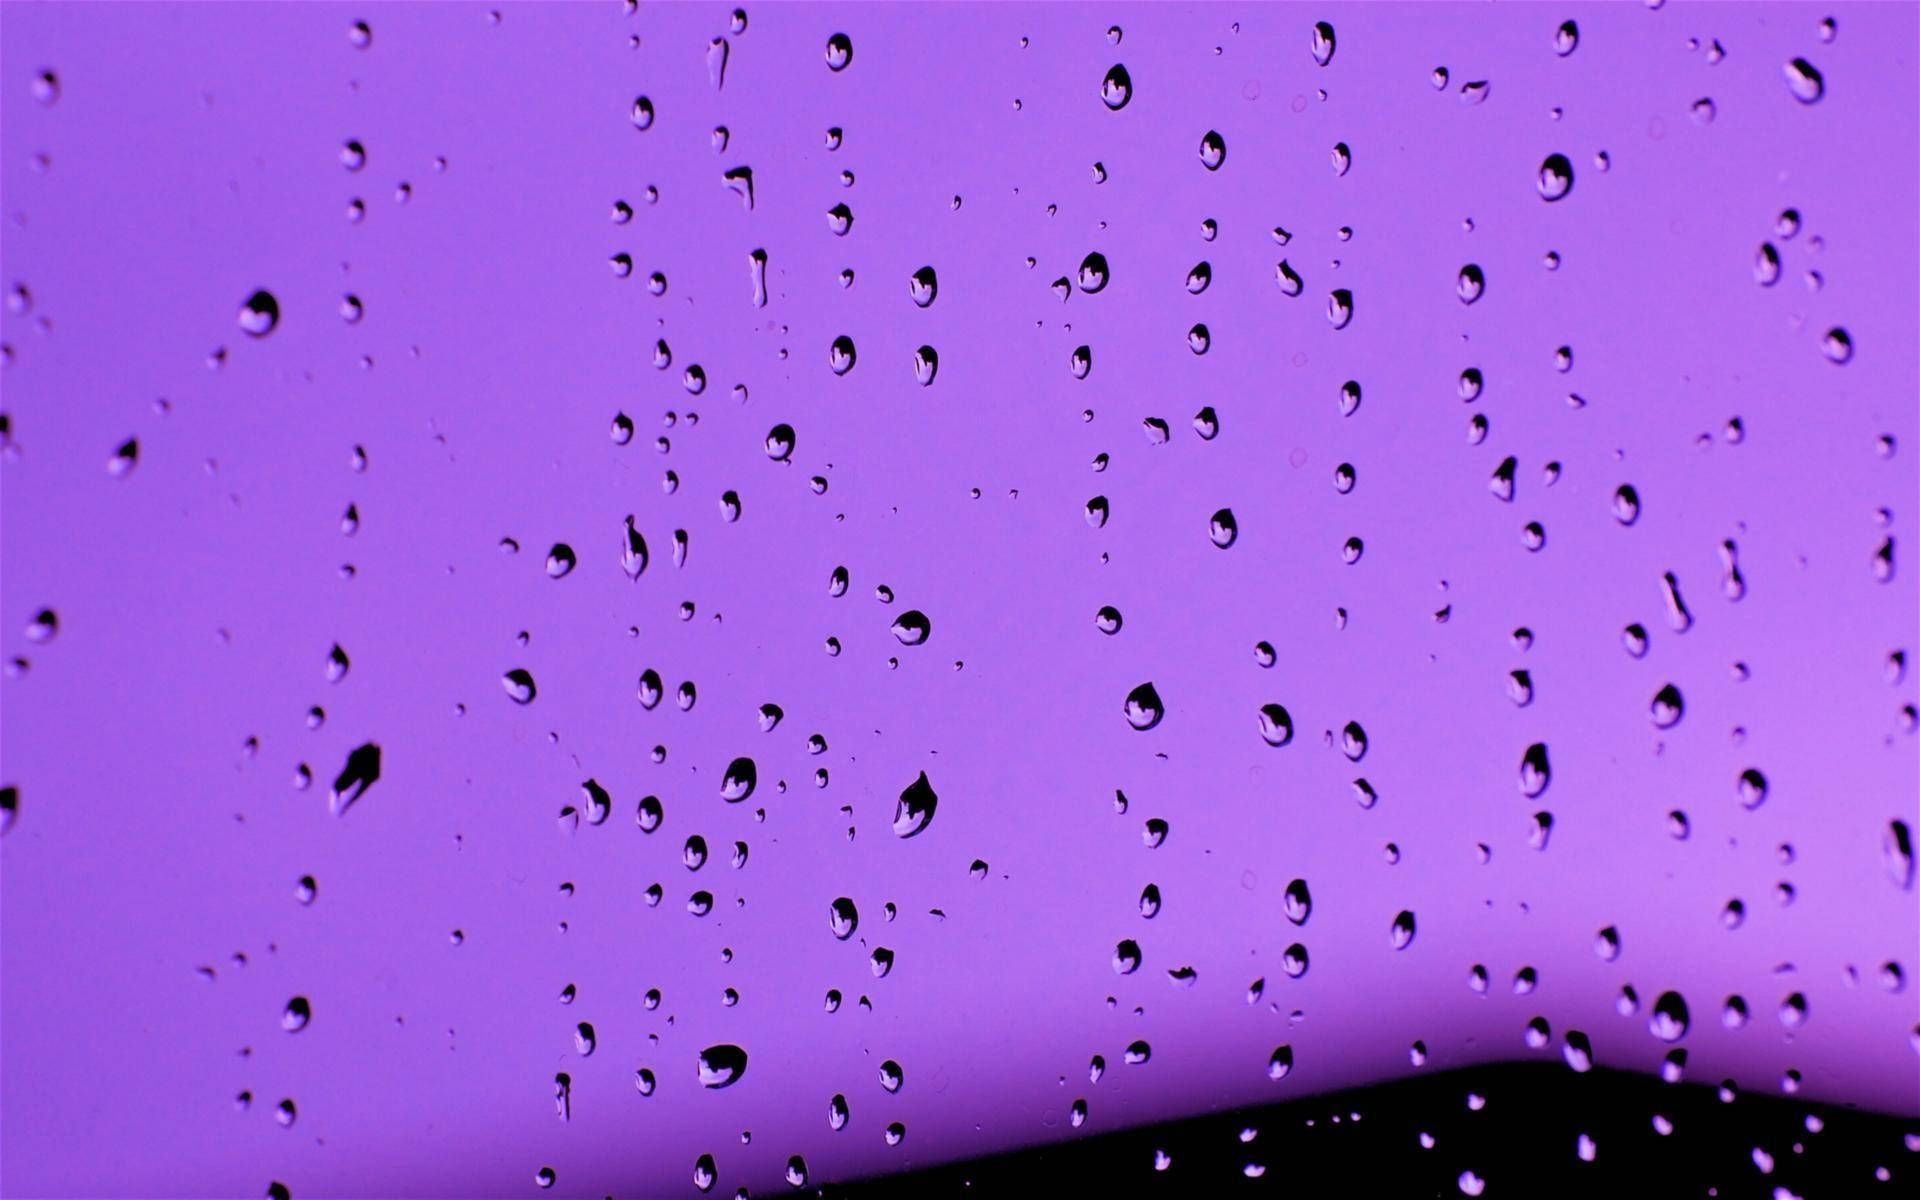 A close up of rain drops on the window - Lavender, light purple, 1920x1200